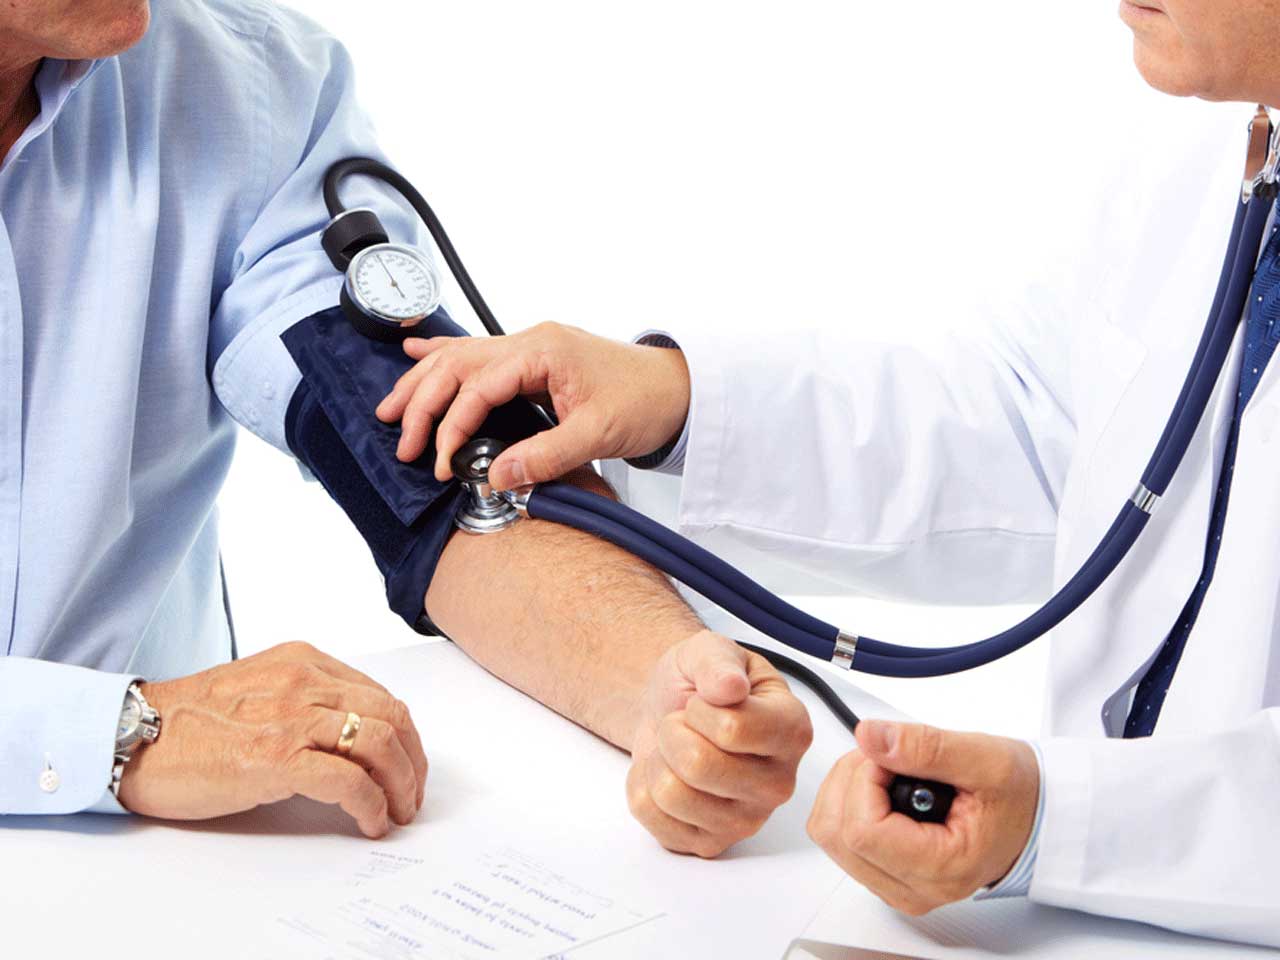 blood-pressure-test-1280x960.jpg (1280×960)